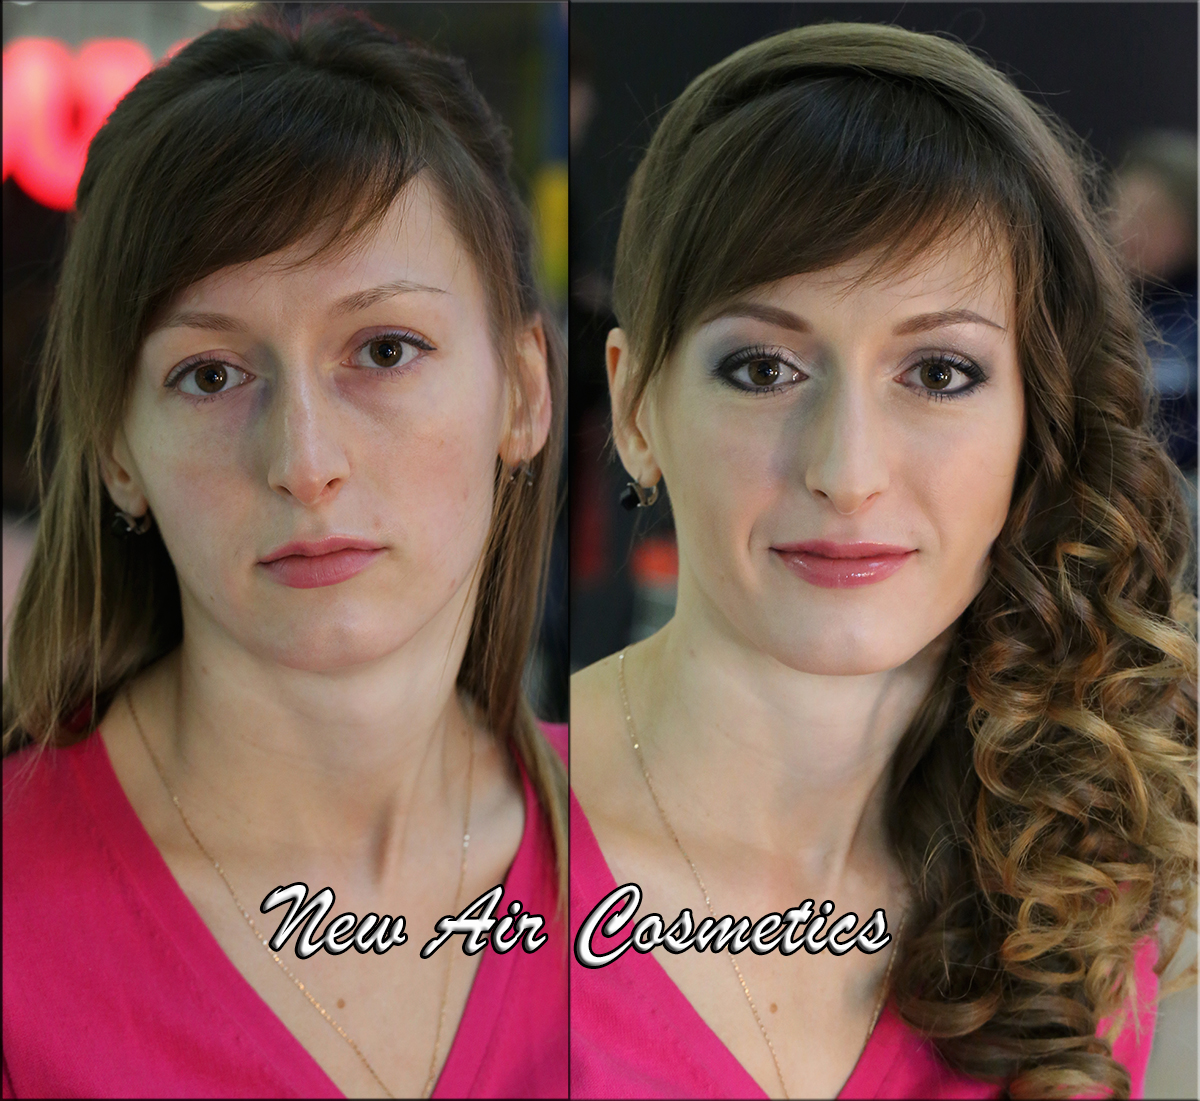 newaircosmetics, студия макияжа и прически, до и после, макияж, makeup transformation, палетка теней